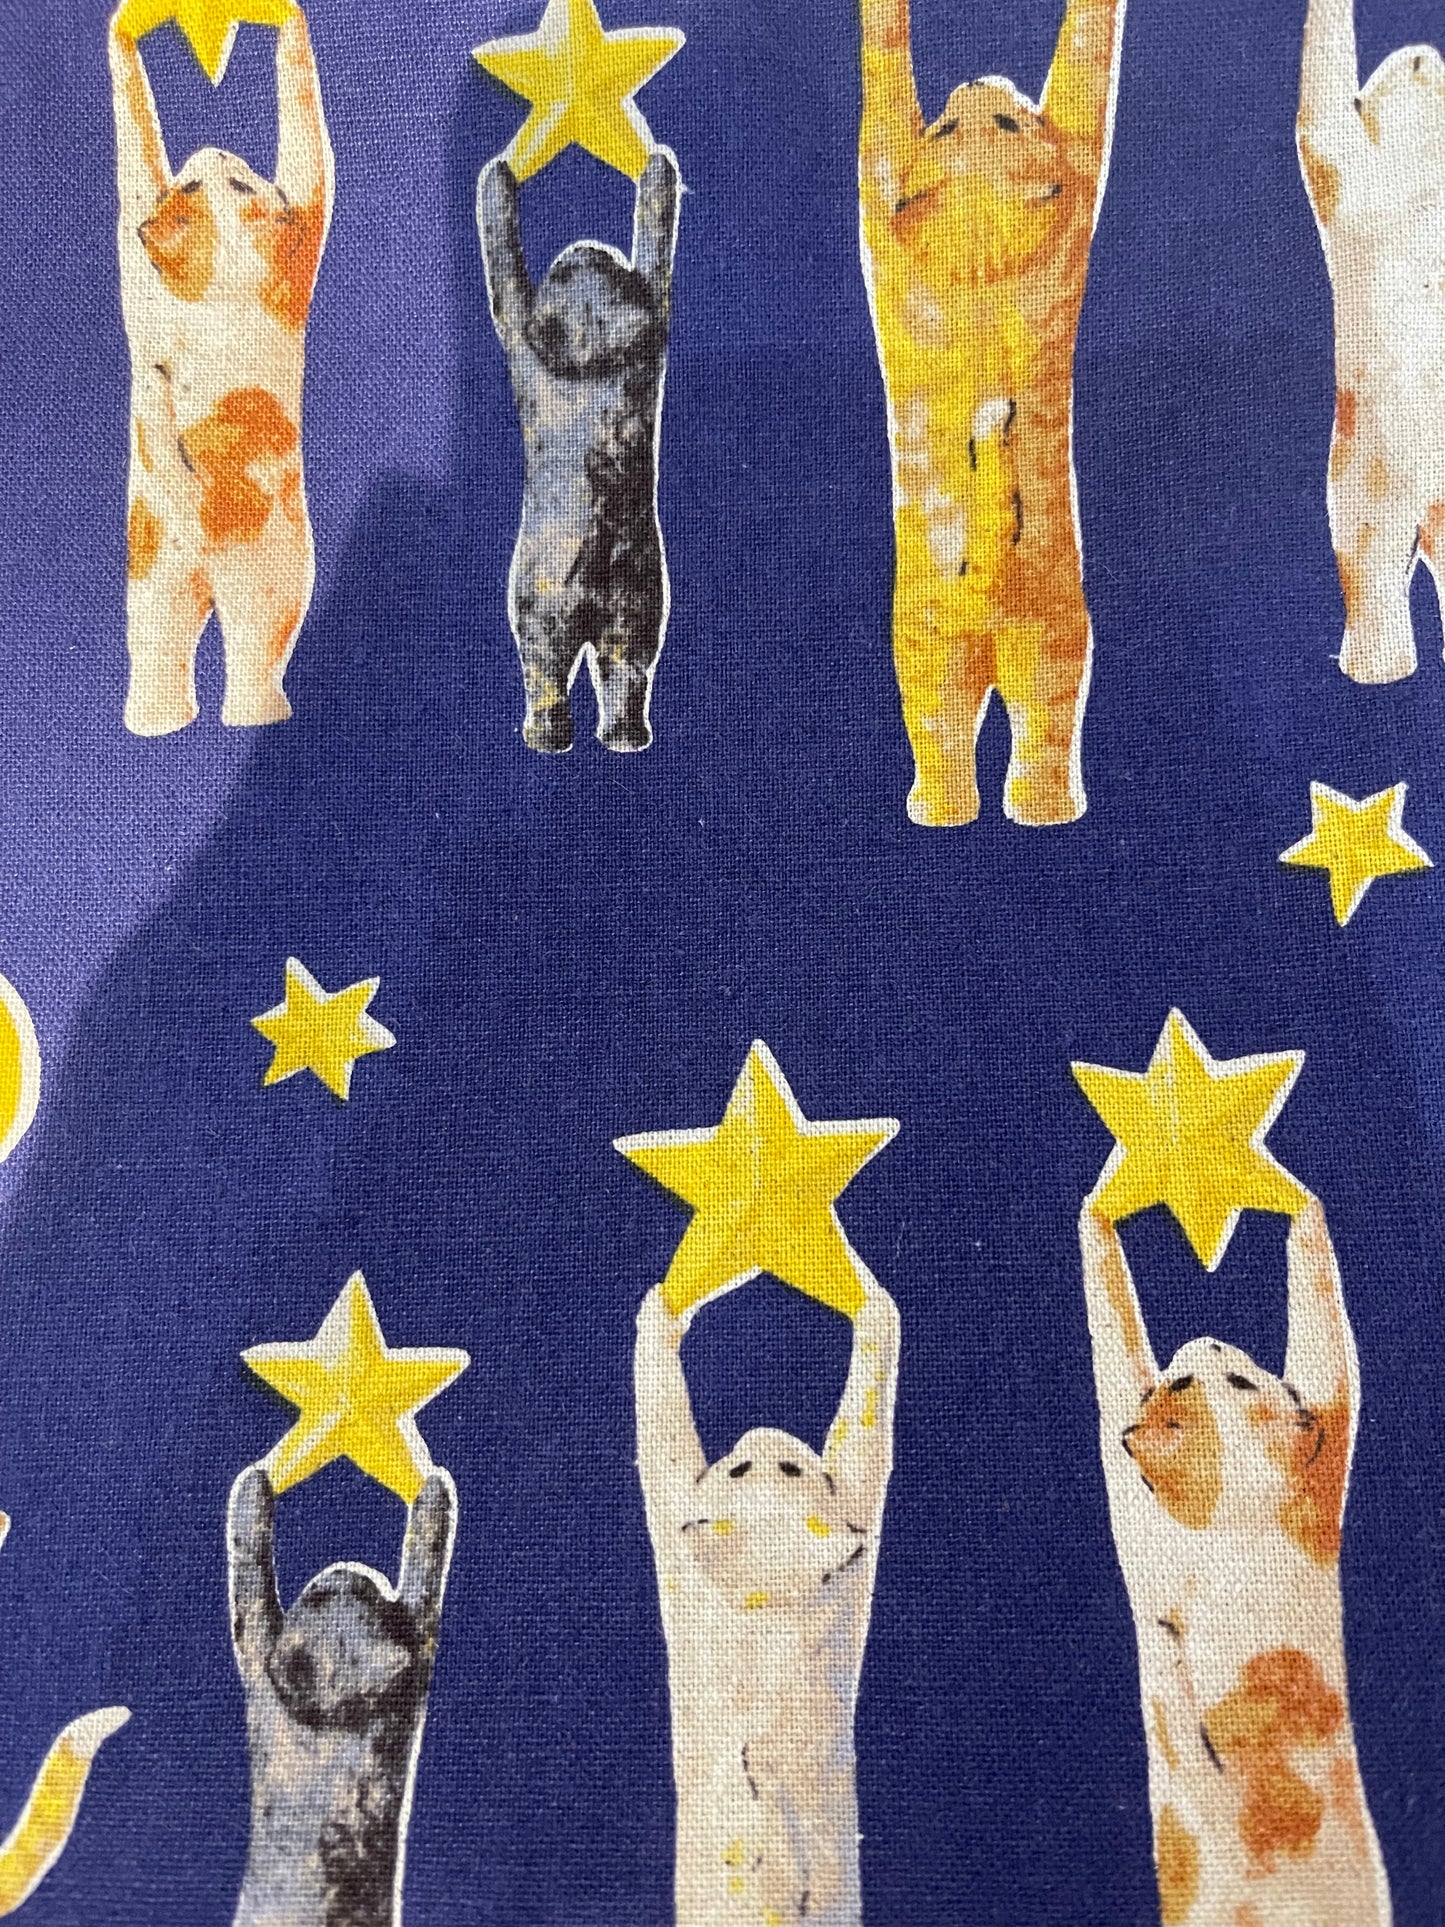 Cats chasing stars shirt